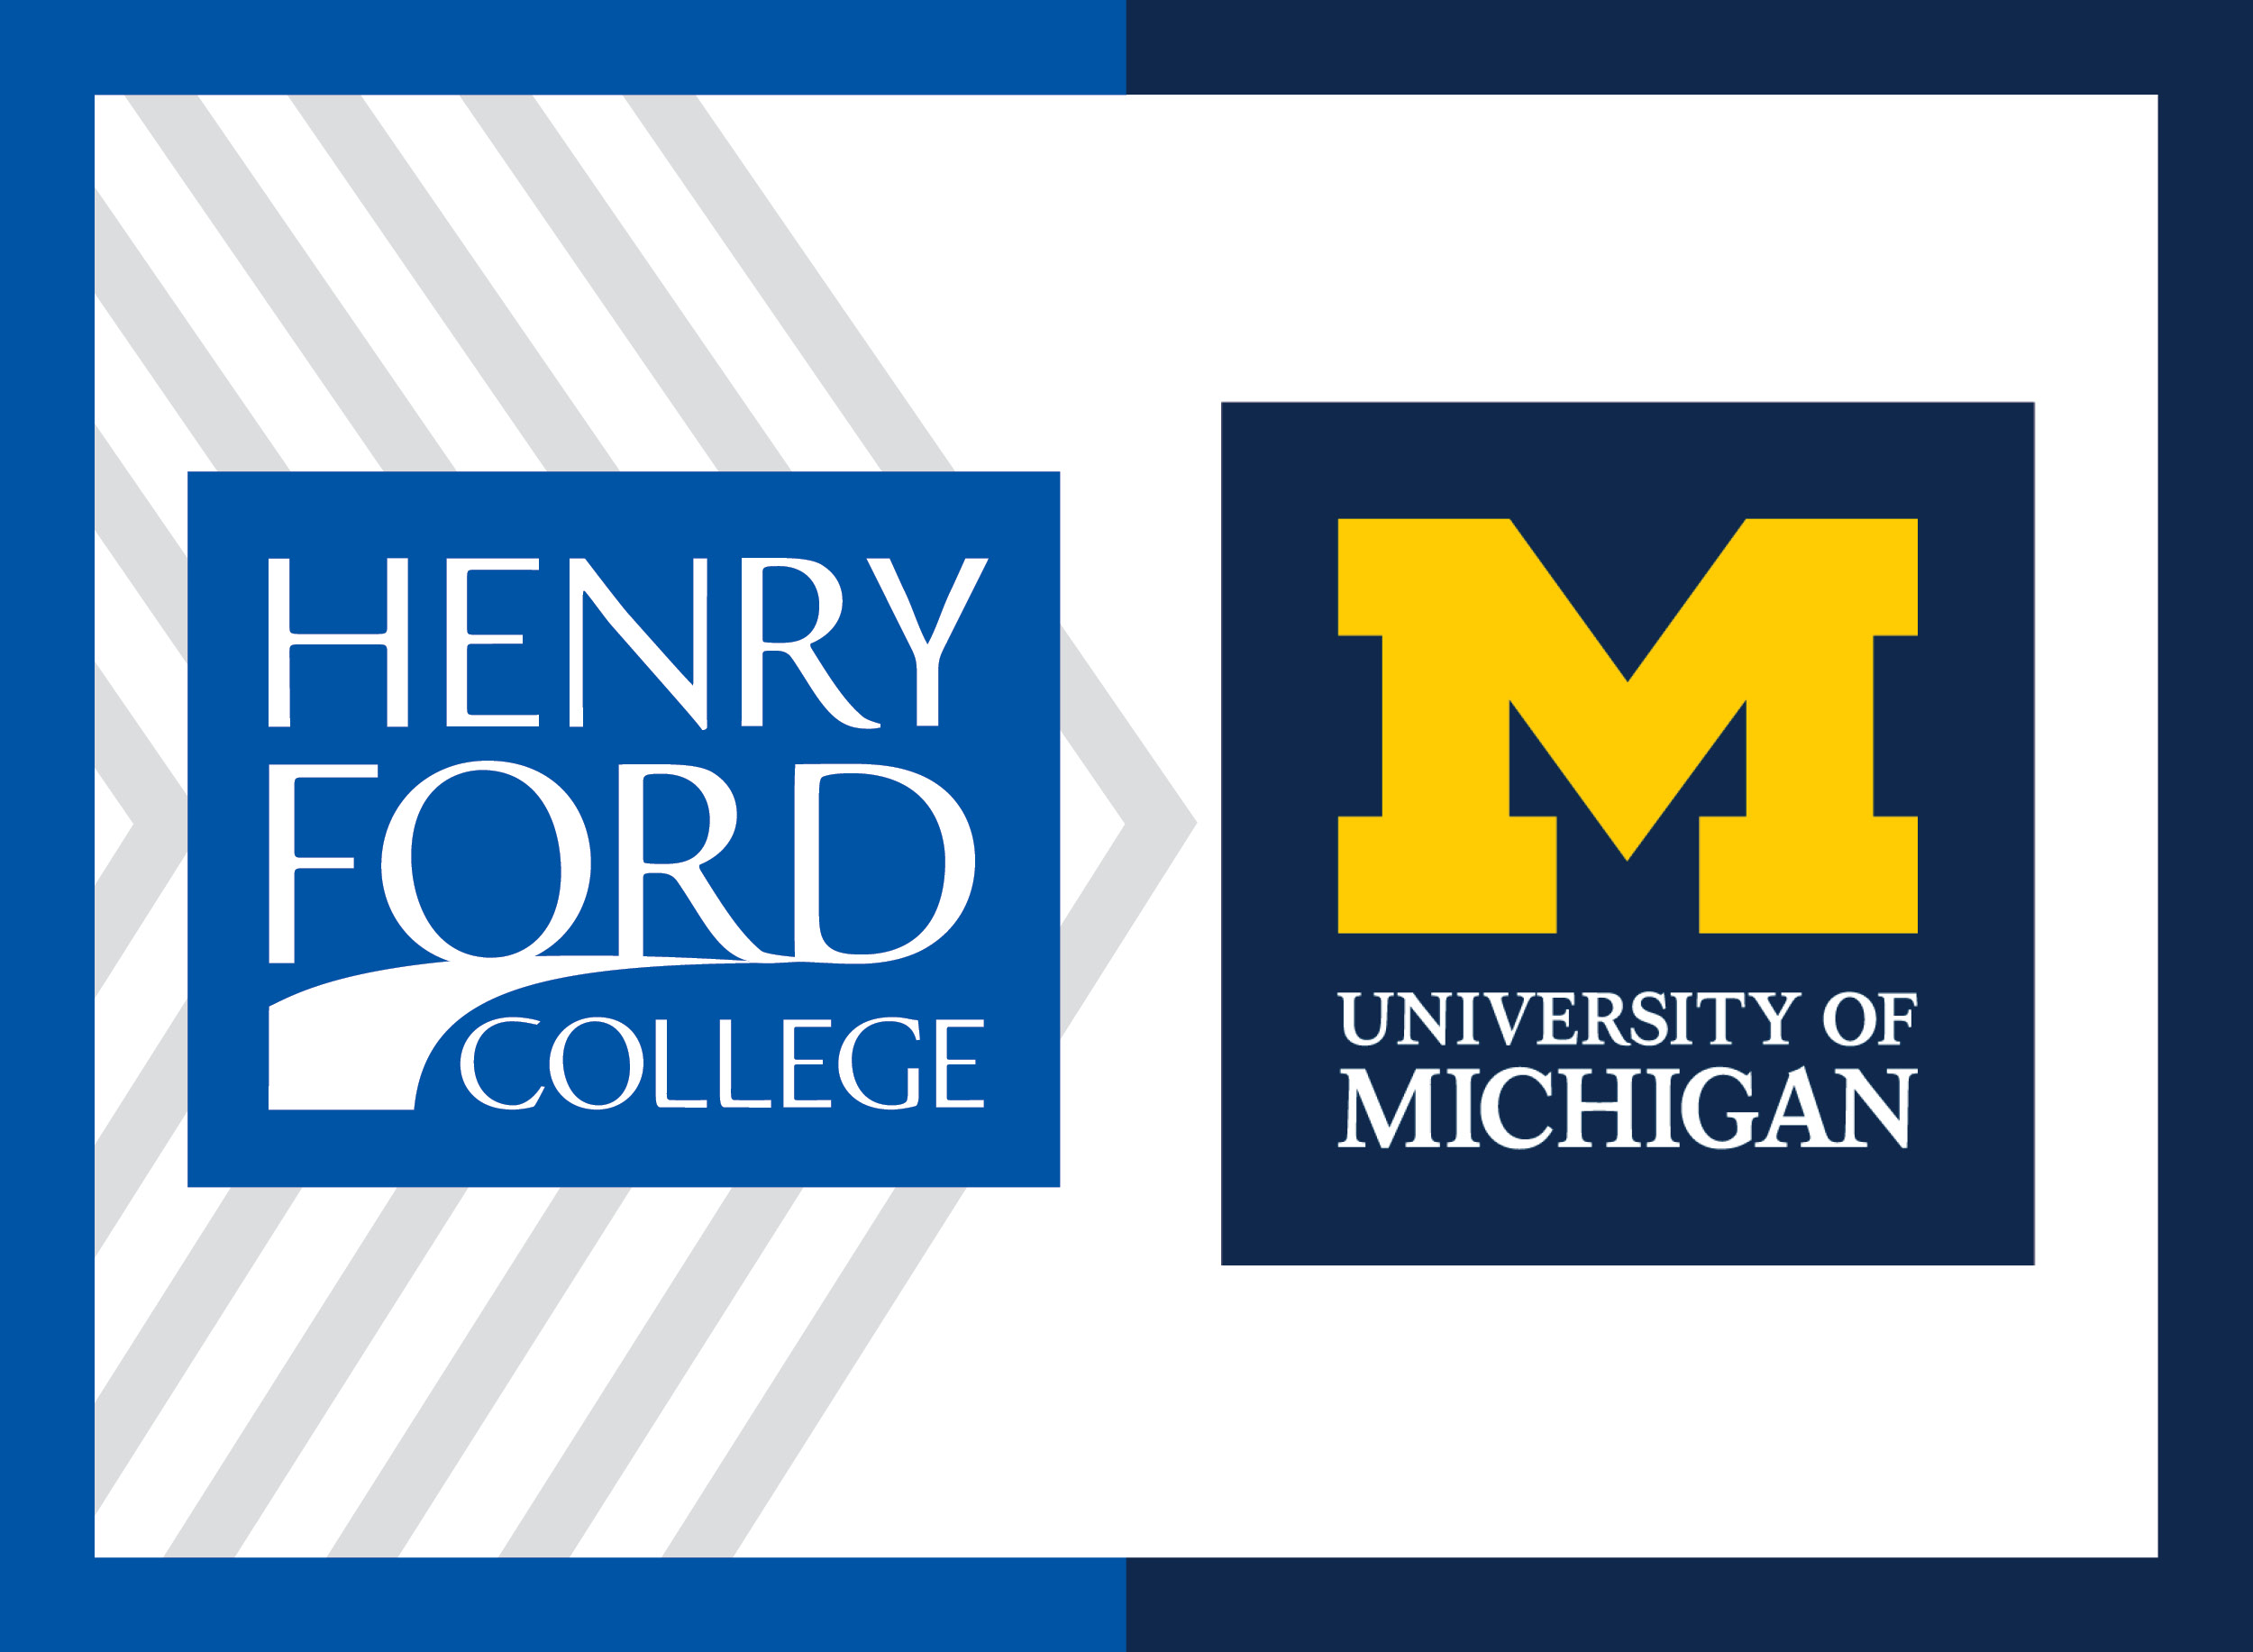 HFC and U of M - Ann Arbor logos